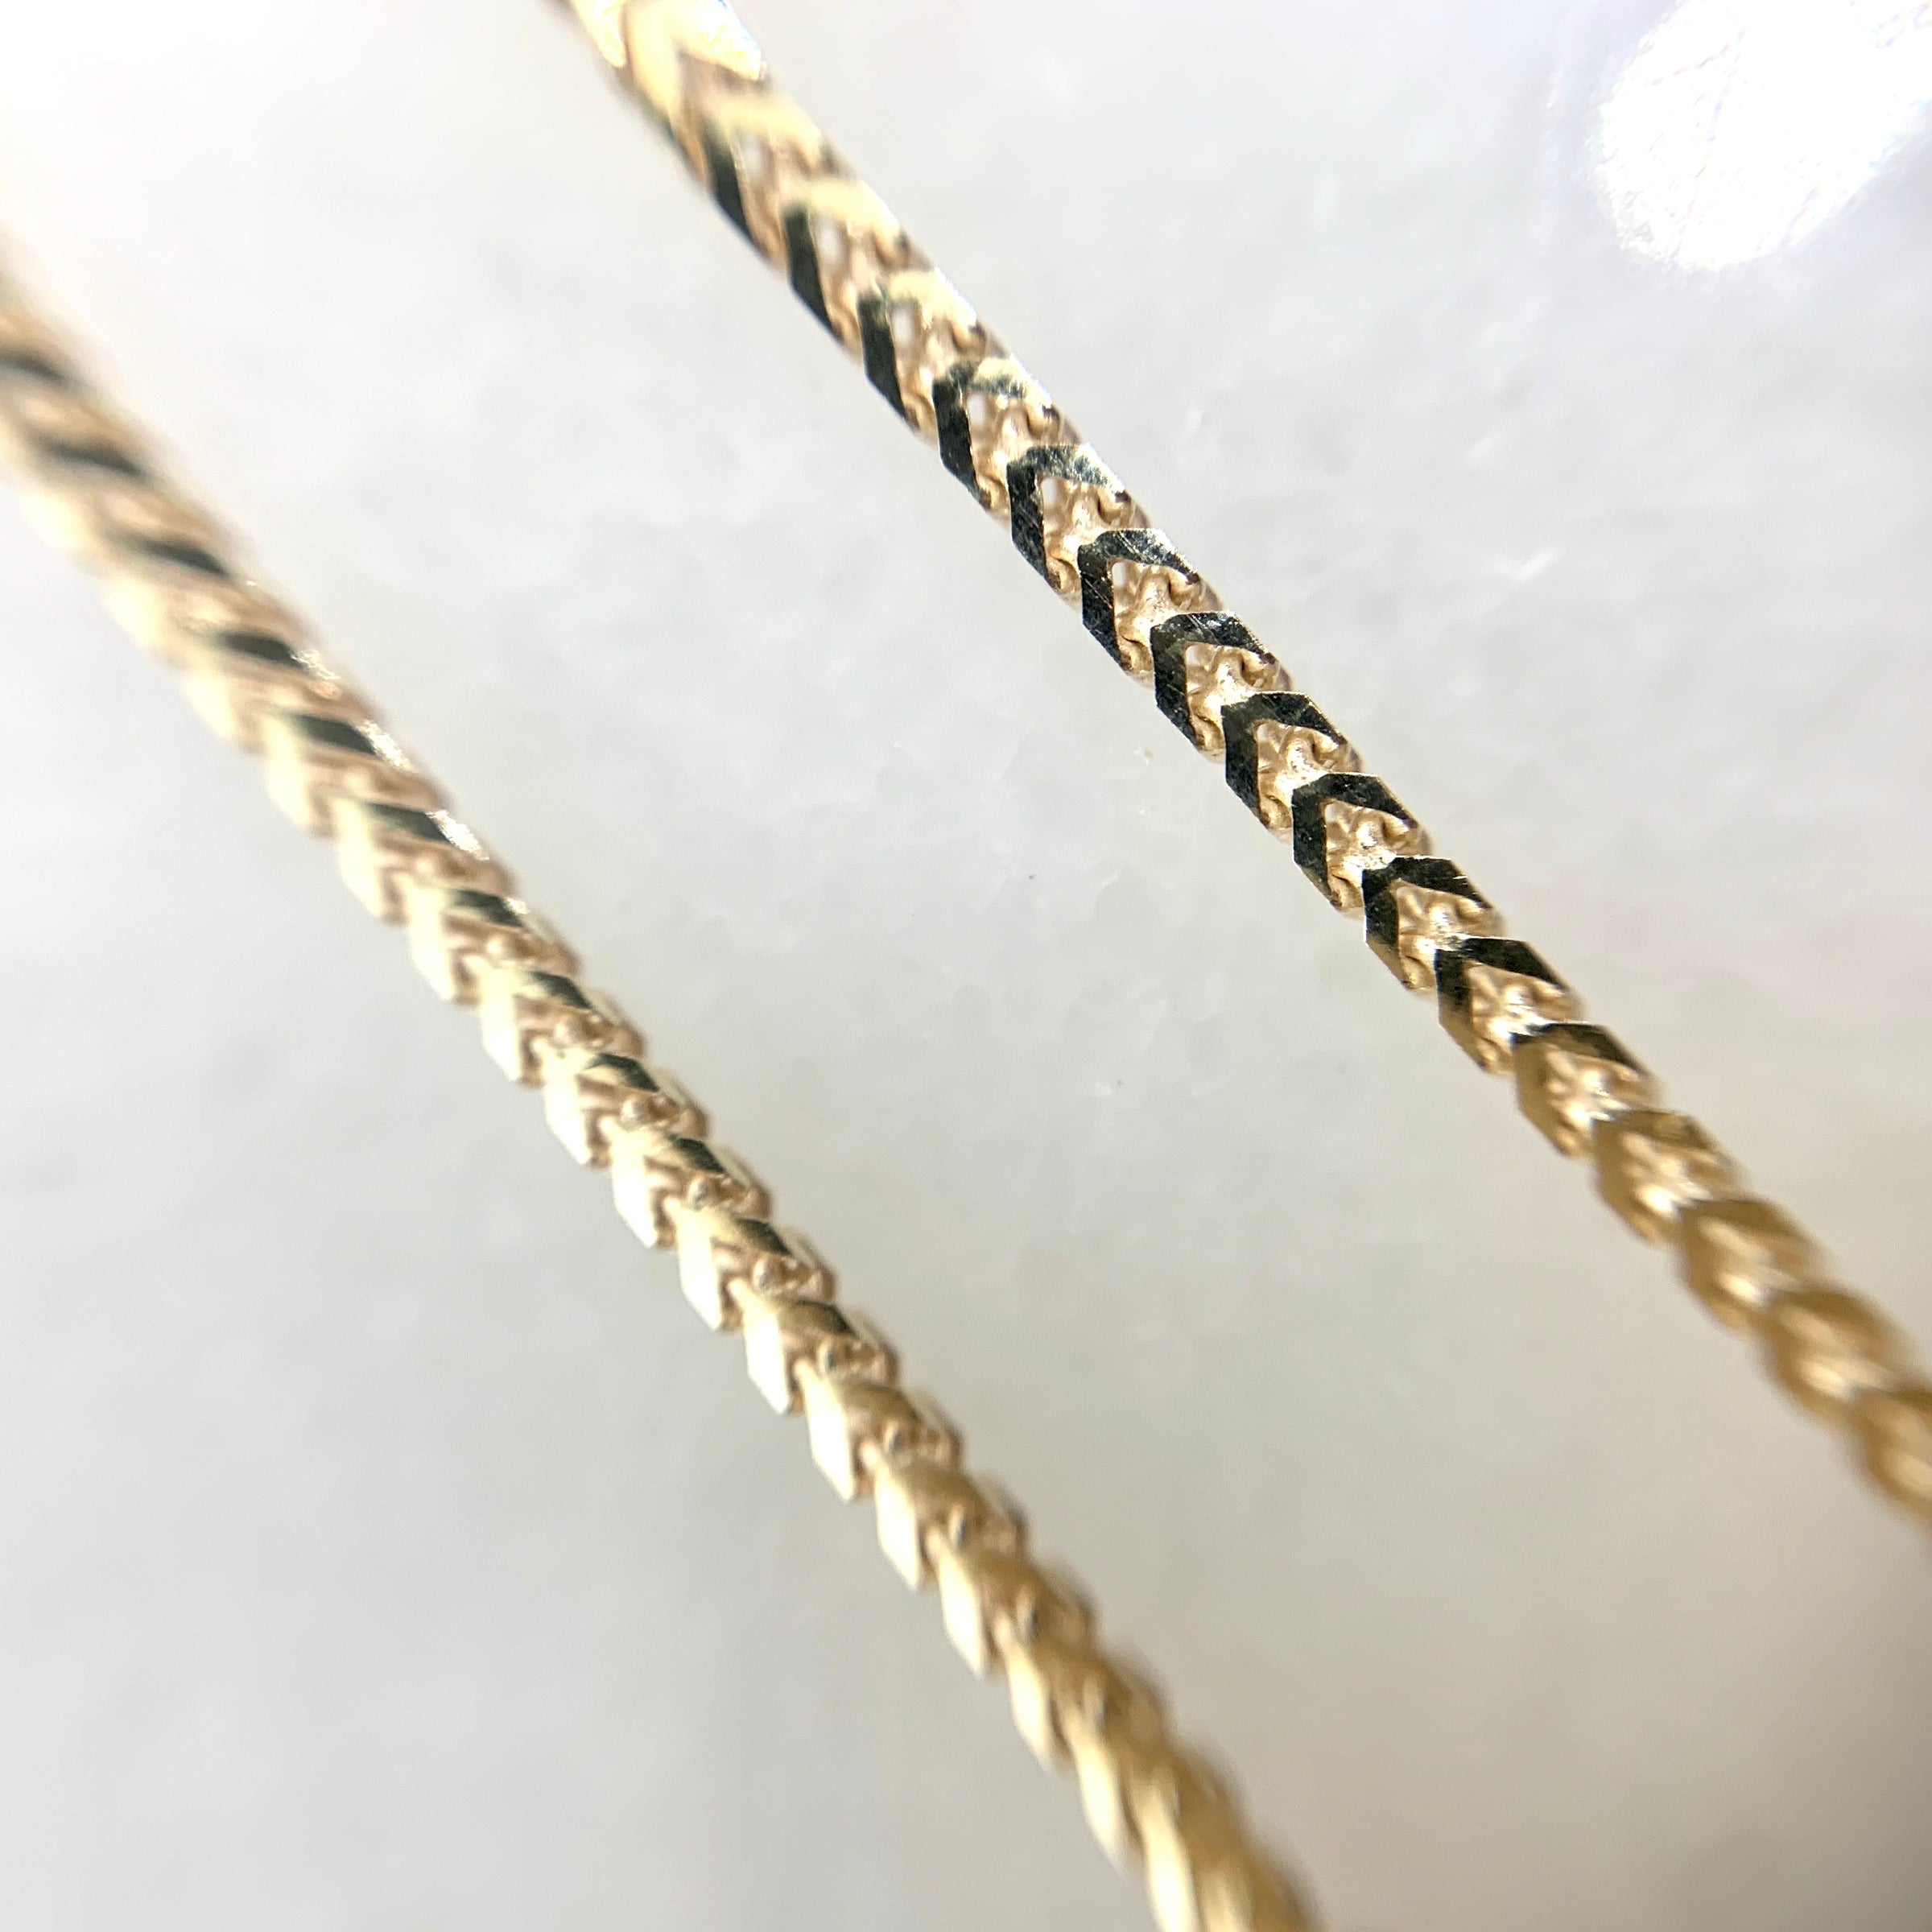 10K Yellow Gold Franco Link 7” Bracelet